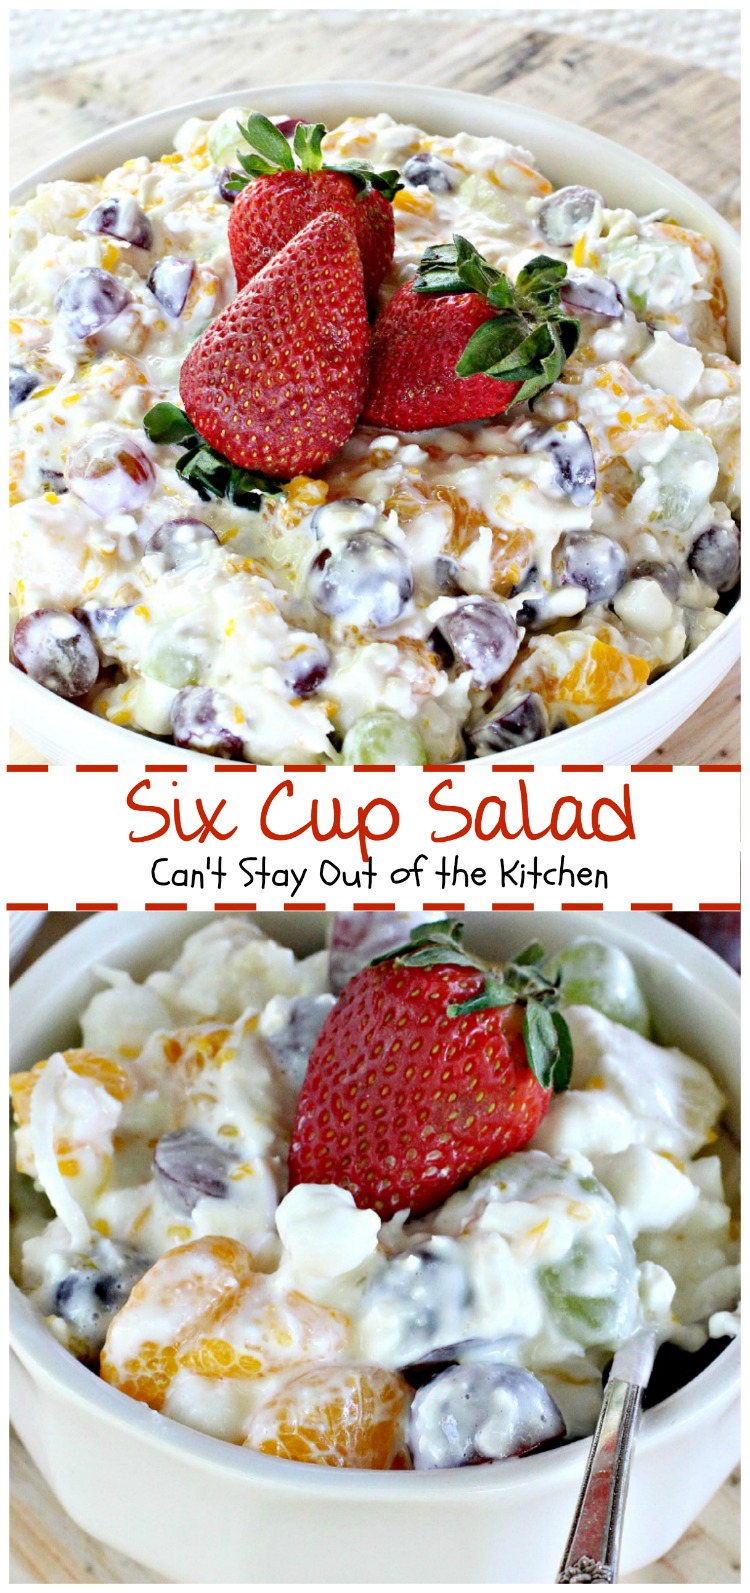 http://cantstayoutofthekitchen.com/wp-content/uploads/Six-Cup-Salad-Collage.jpg